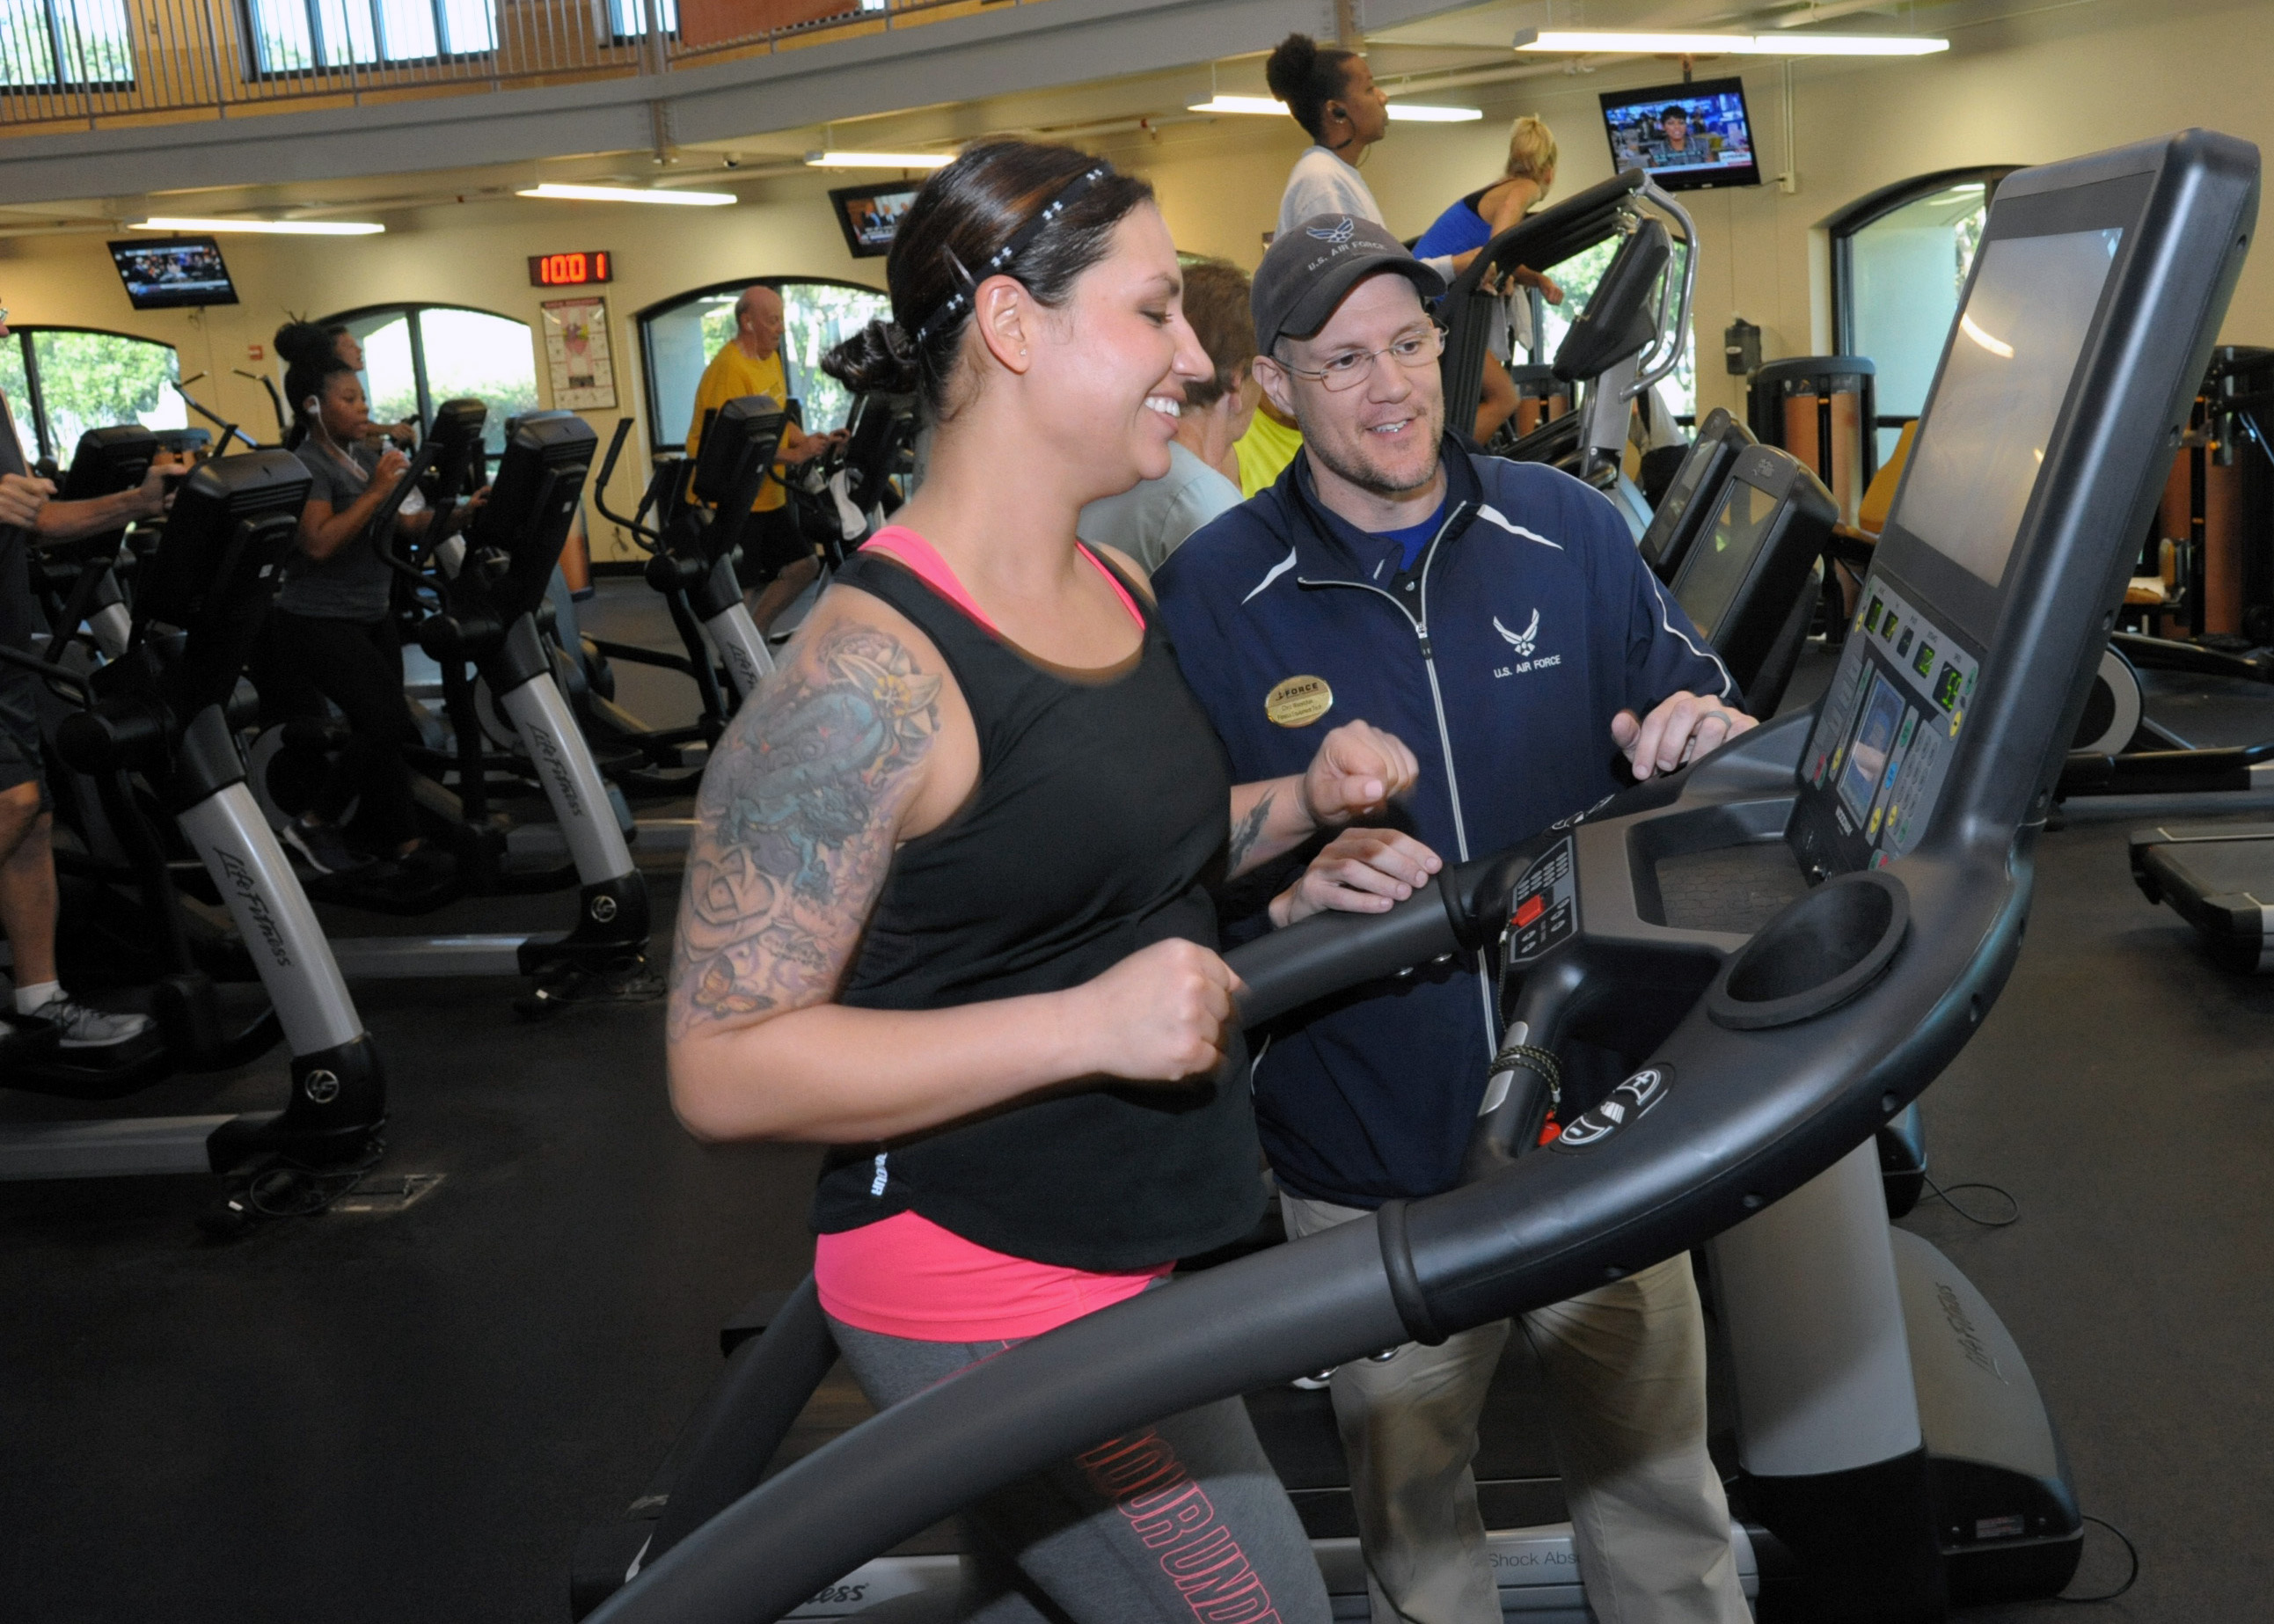 Rambler Fitness Center: Achieve Your Fitness Goals